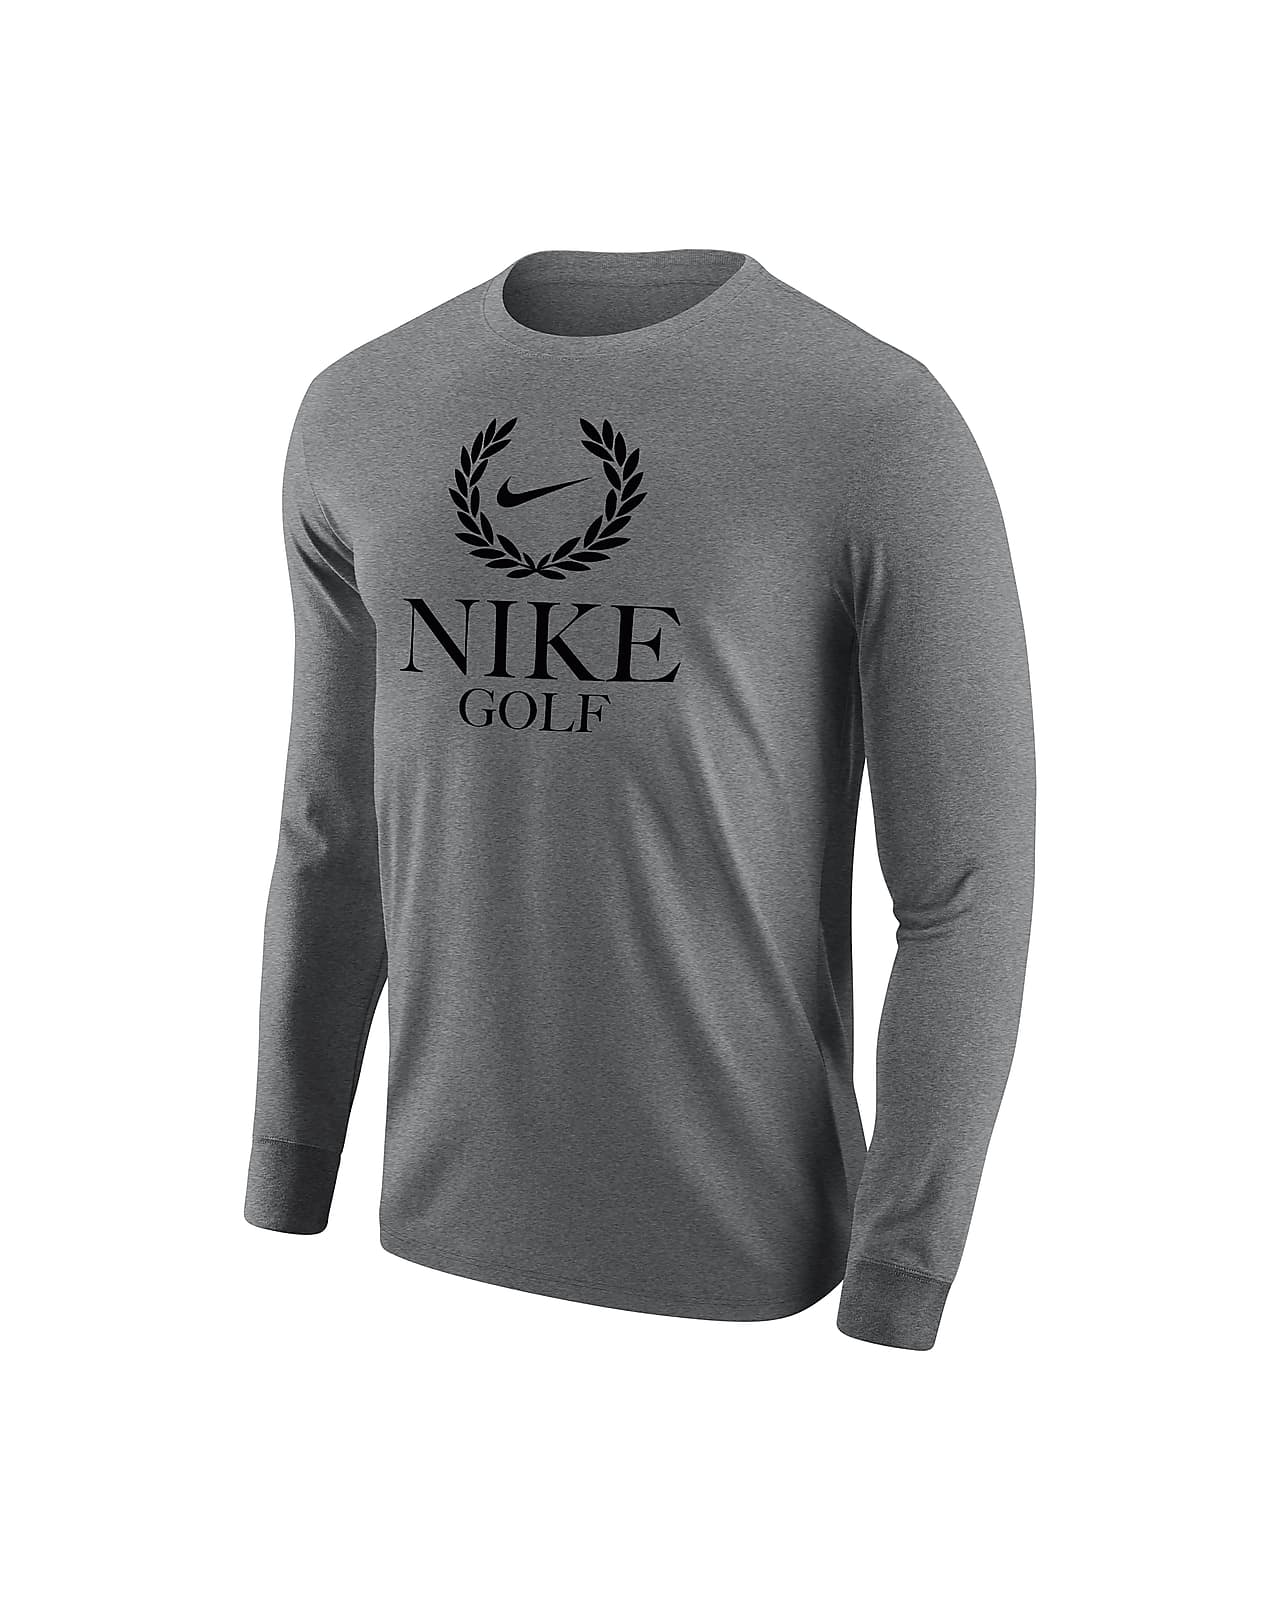 Nike Golf Men's T-Shirt